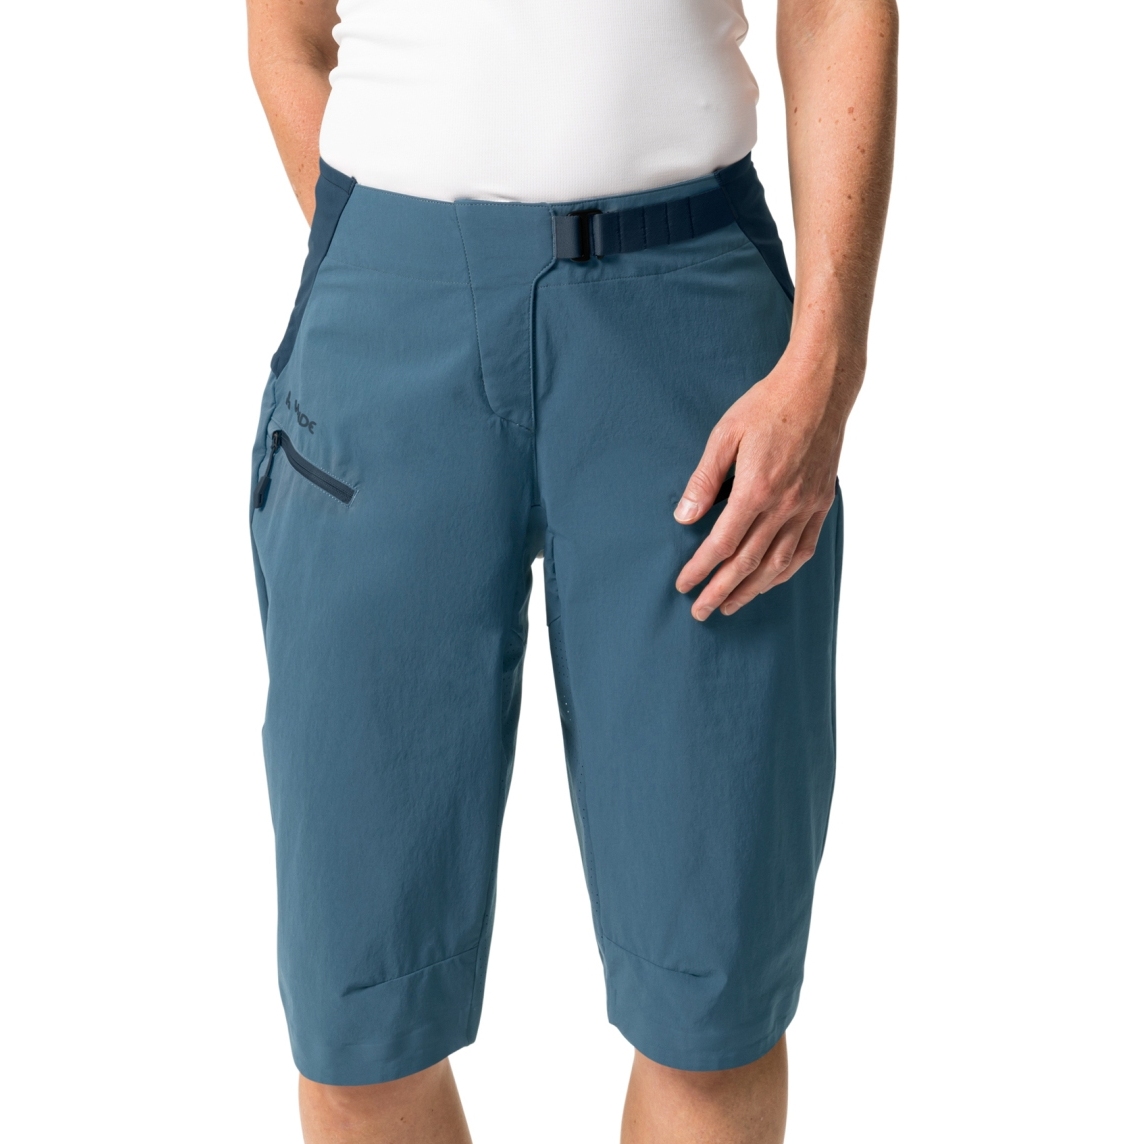 Shorts - grey | Moab Vaude blue PRO Women\'s BIKE24